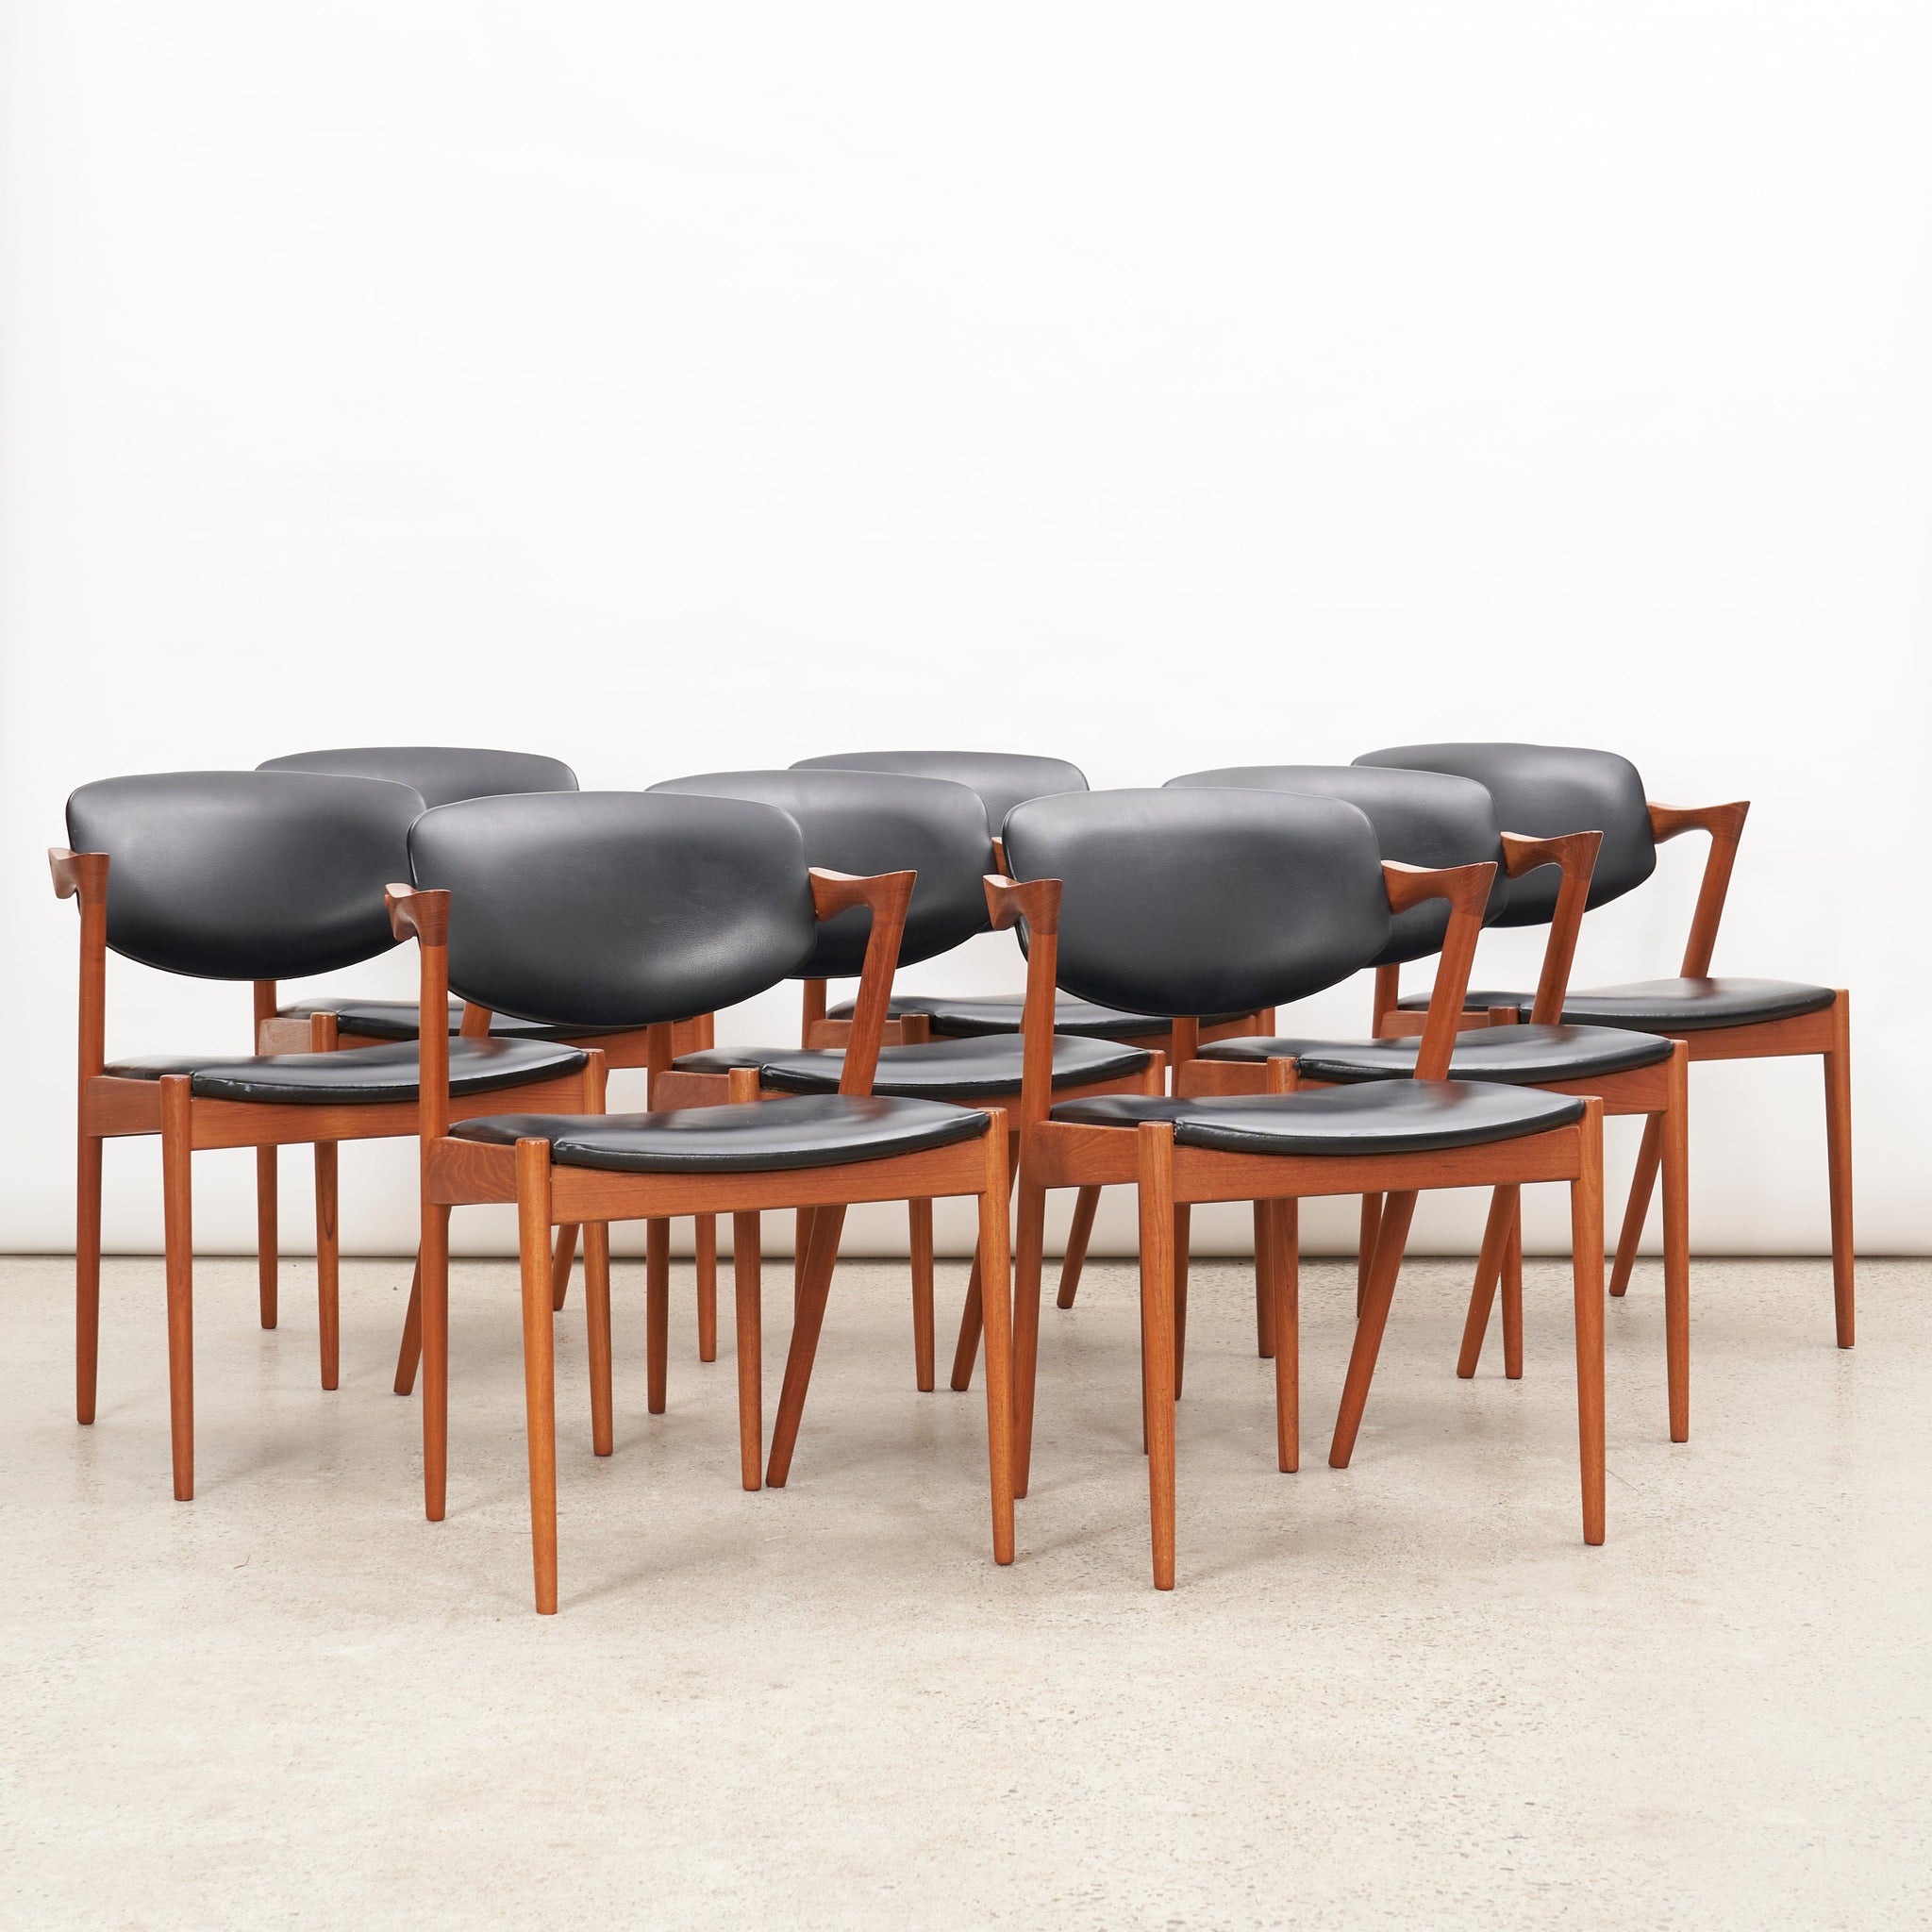 Set of 8 'Model 42' Teak Dining Chairs by Kai Kristiansen. Vintage furniture, danish design. Scandinavian modern. Mid-century modern.